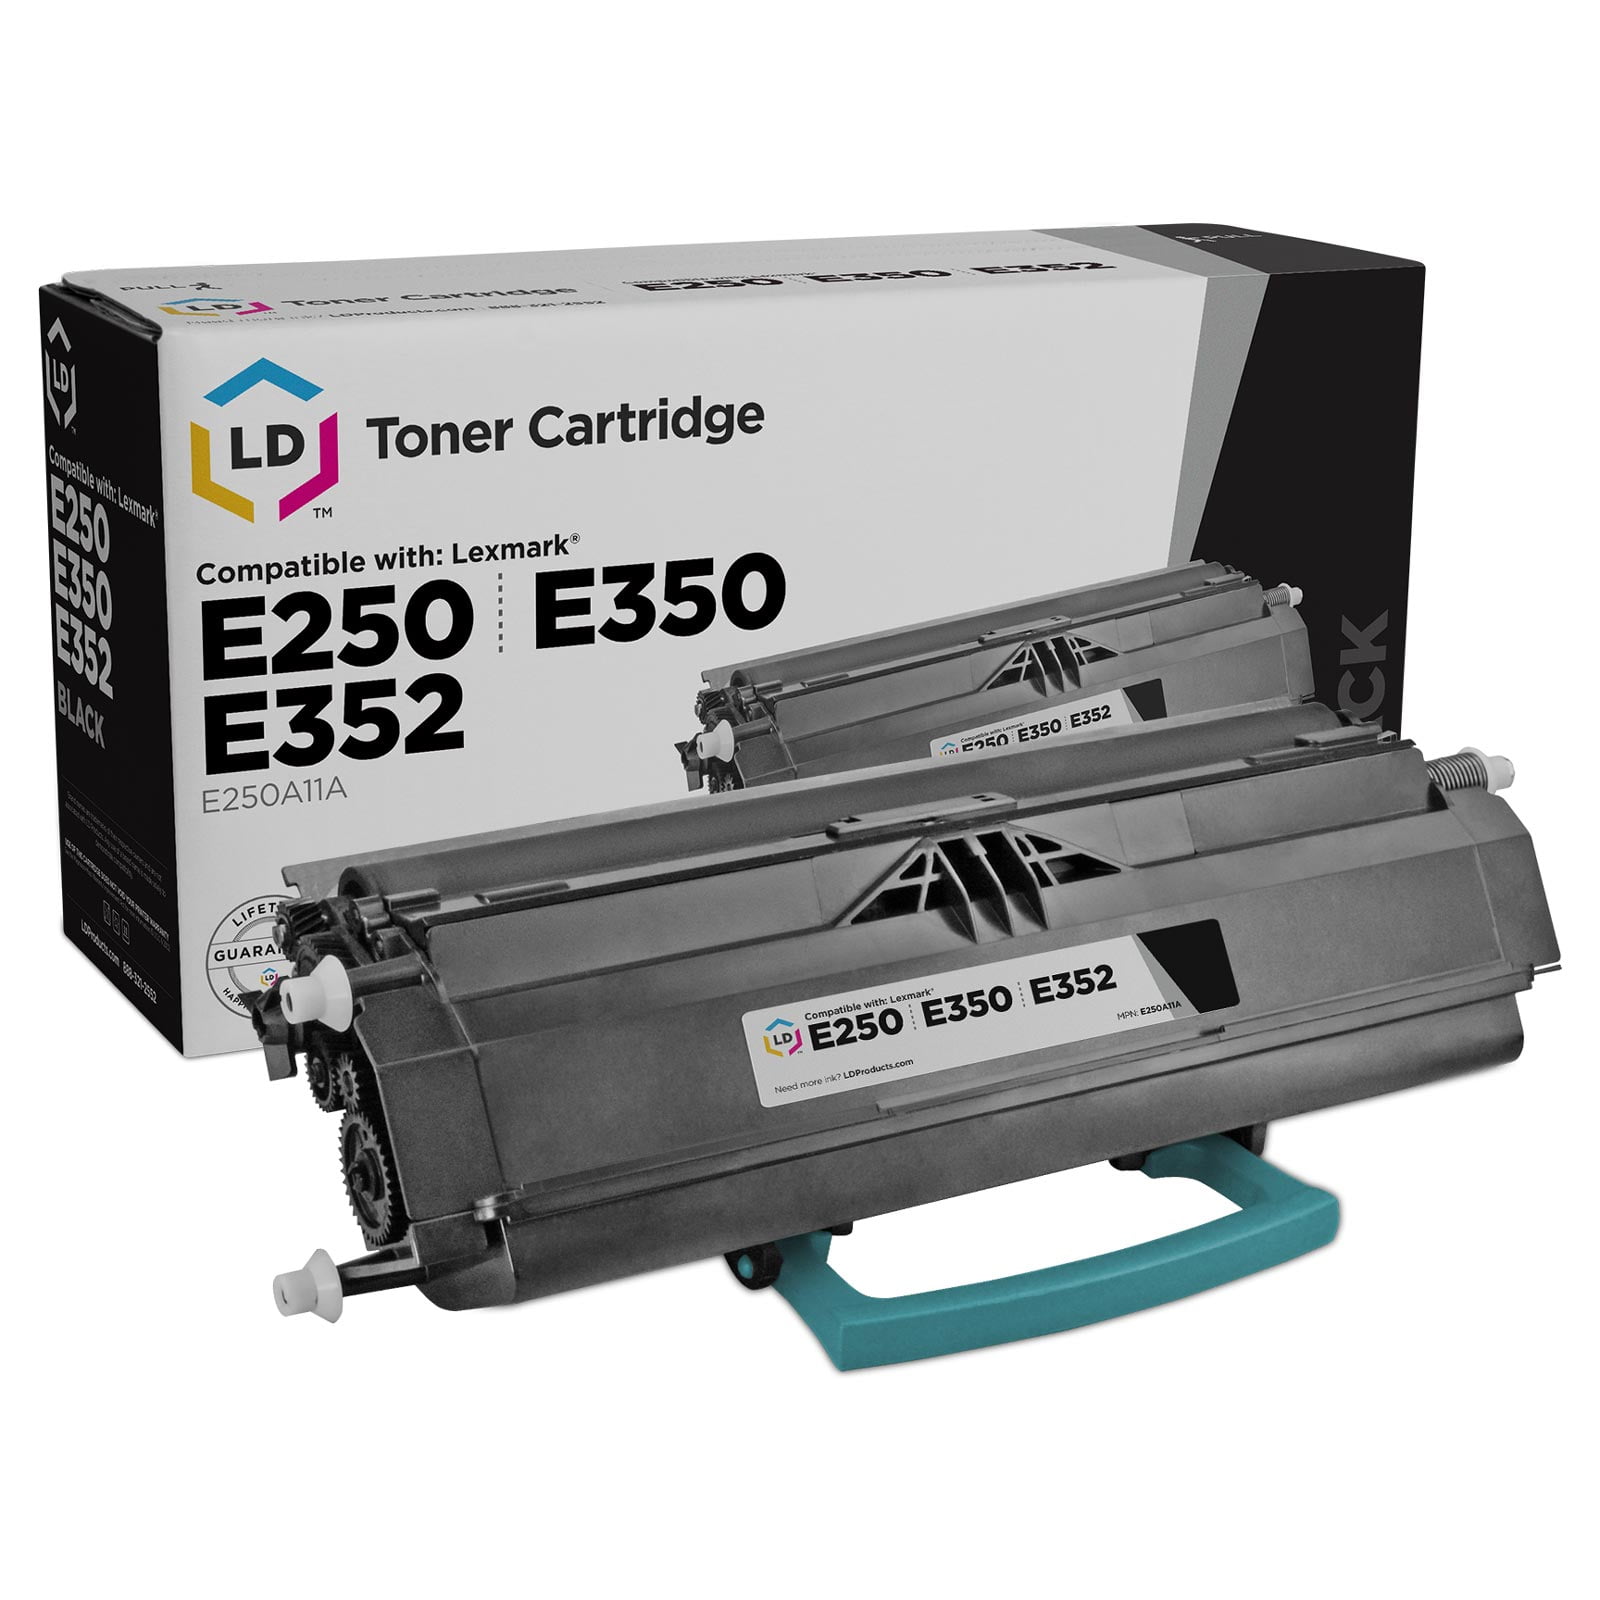 E352 1 x Black Toner Cartridge Non-OEM Alternative For Lexmark E250 E350 